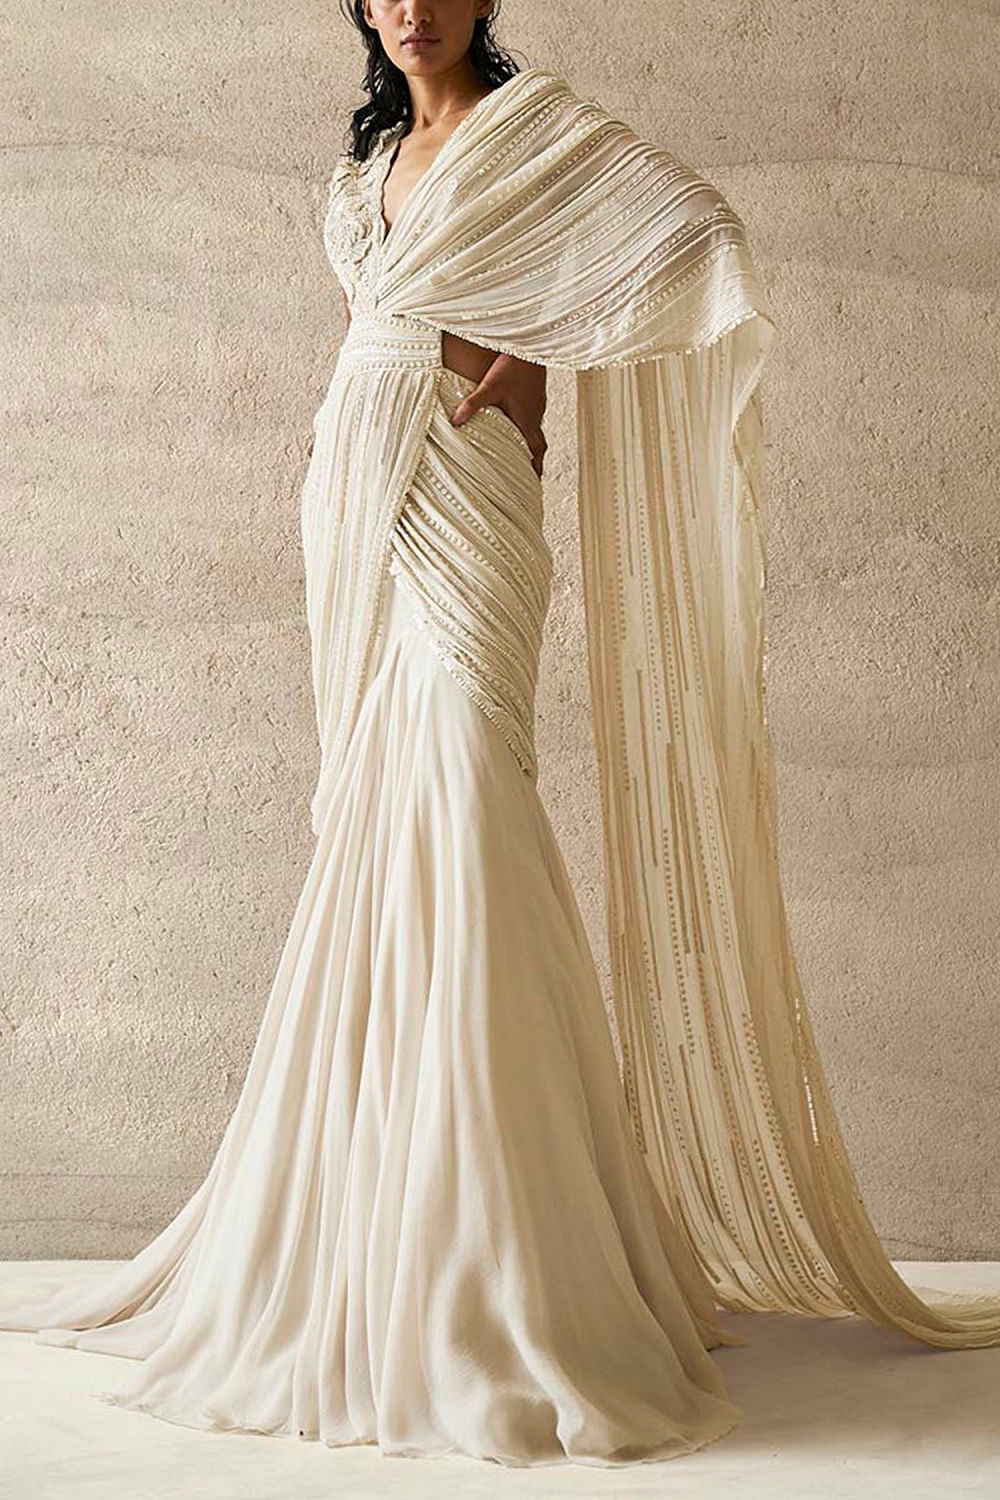 Search - Tag - pre-draped saree gown